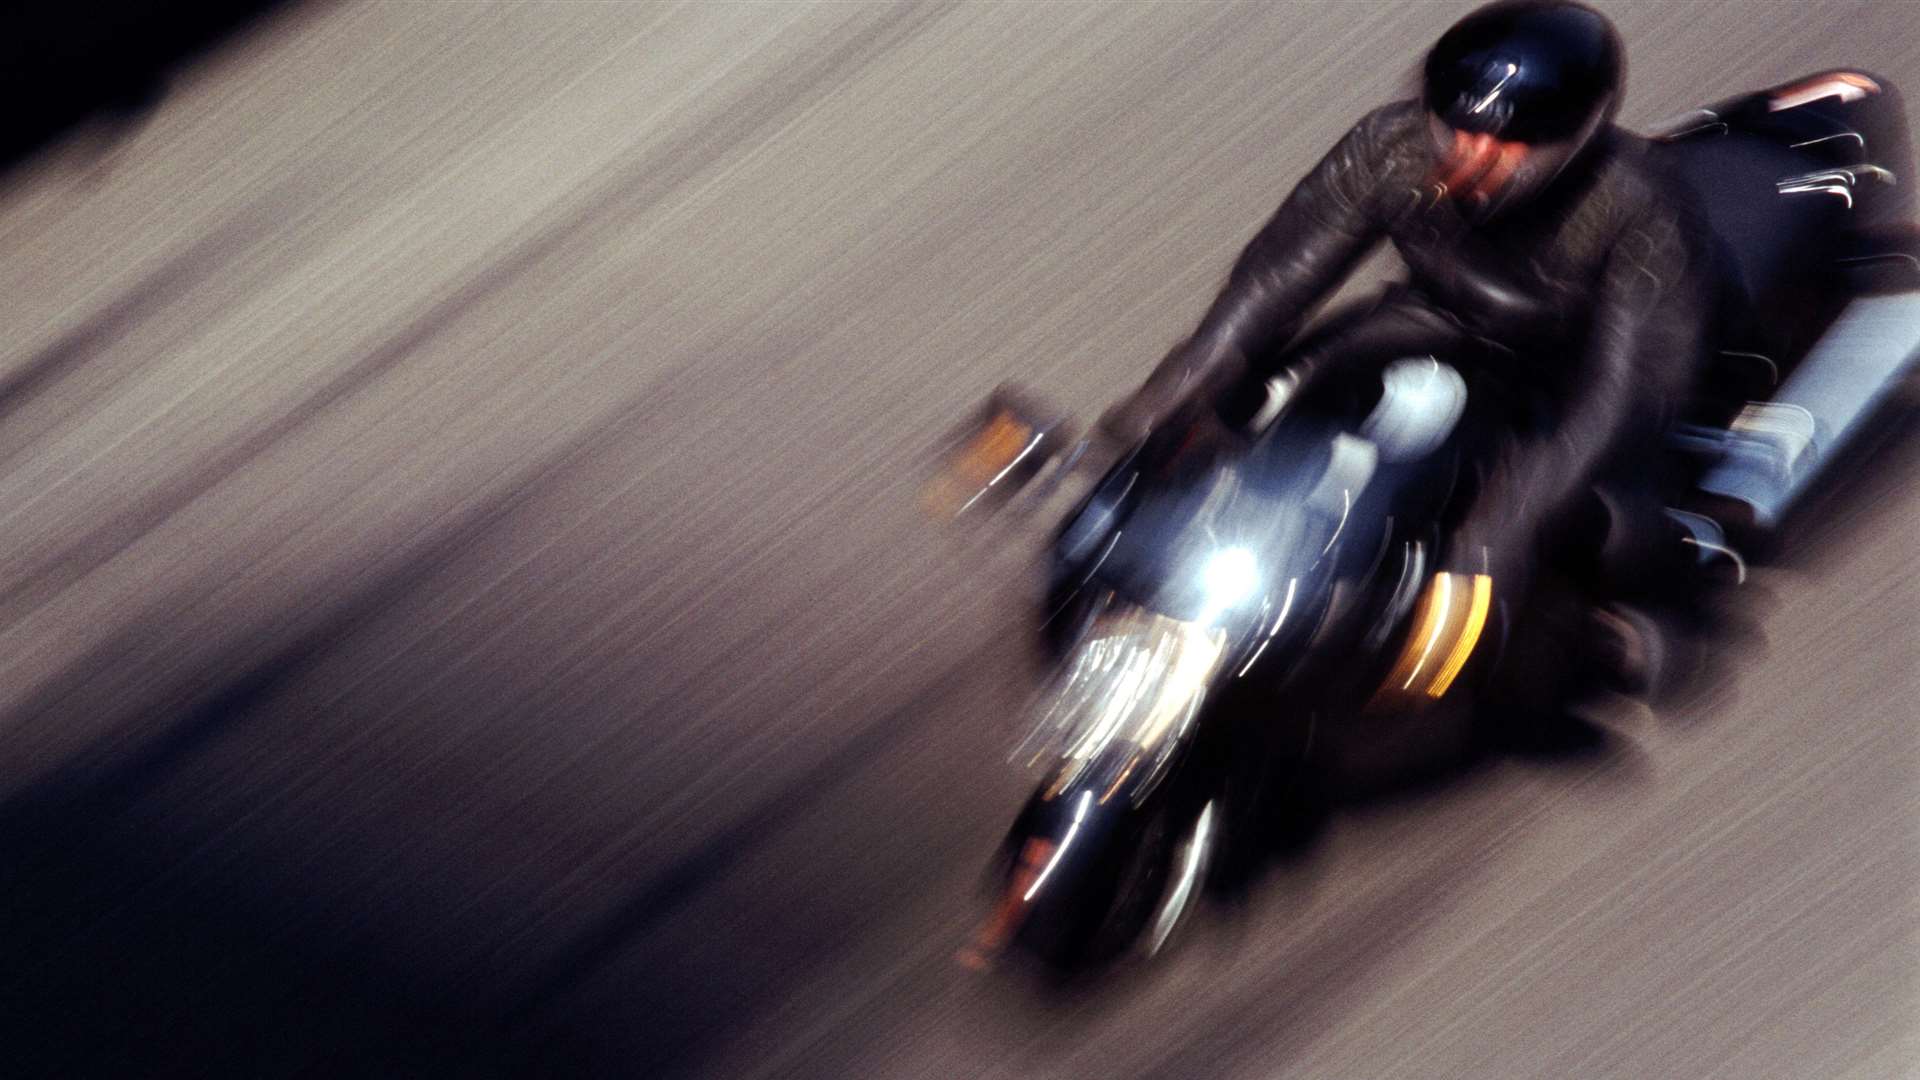 Stock pic: Man riding a motorbike